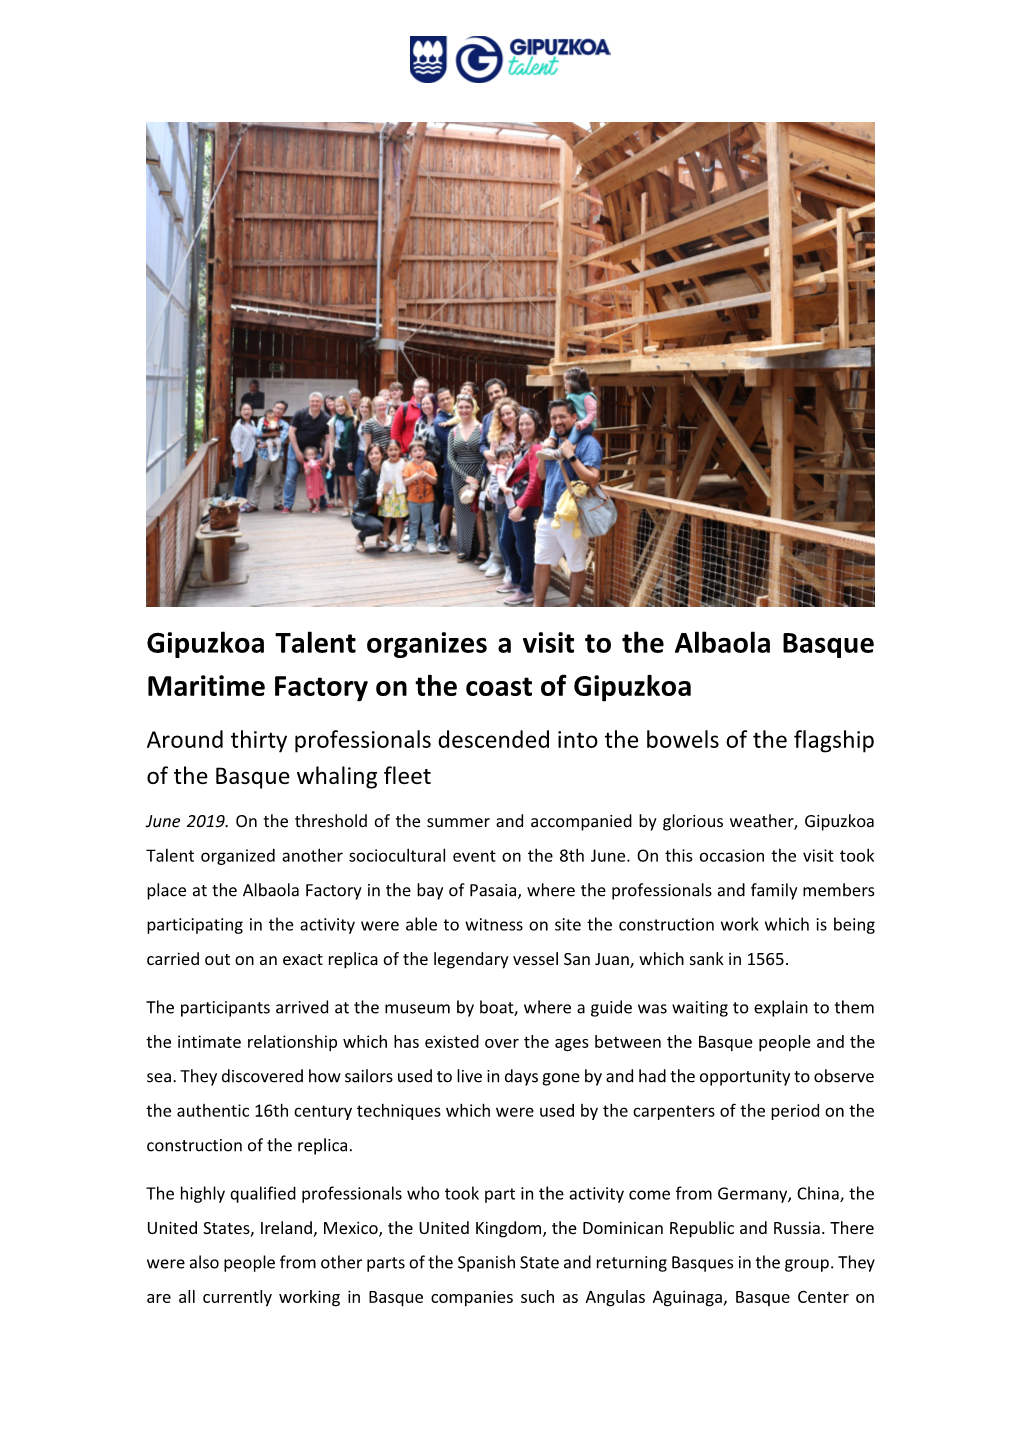 Gipuzkoa Talent Organizes a Visit to the Albaola Basque Maritime